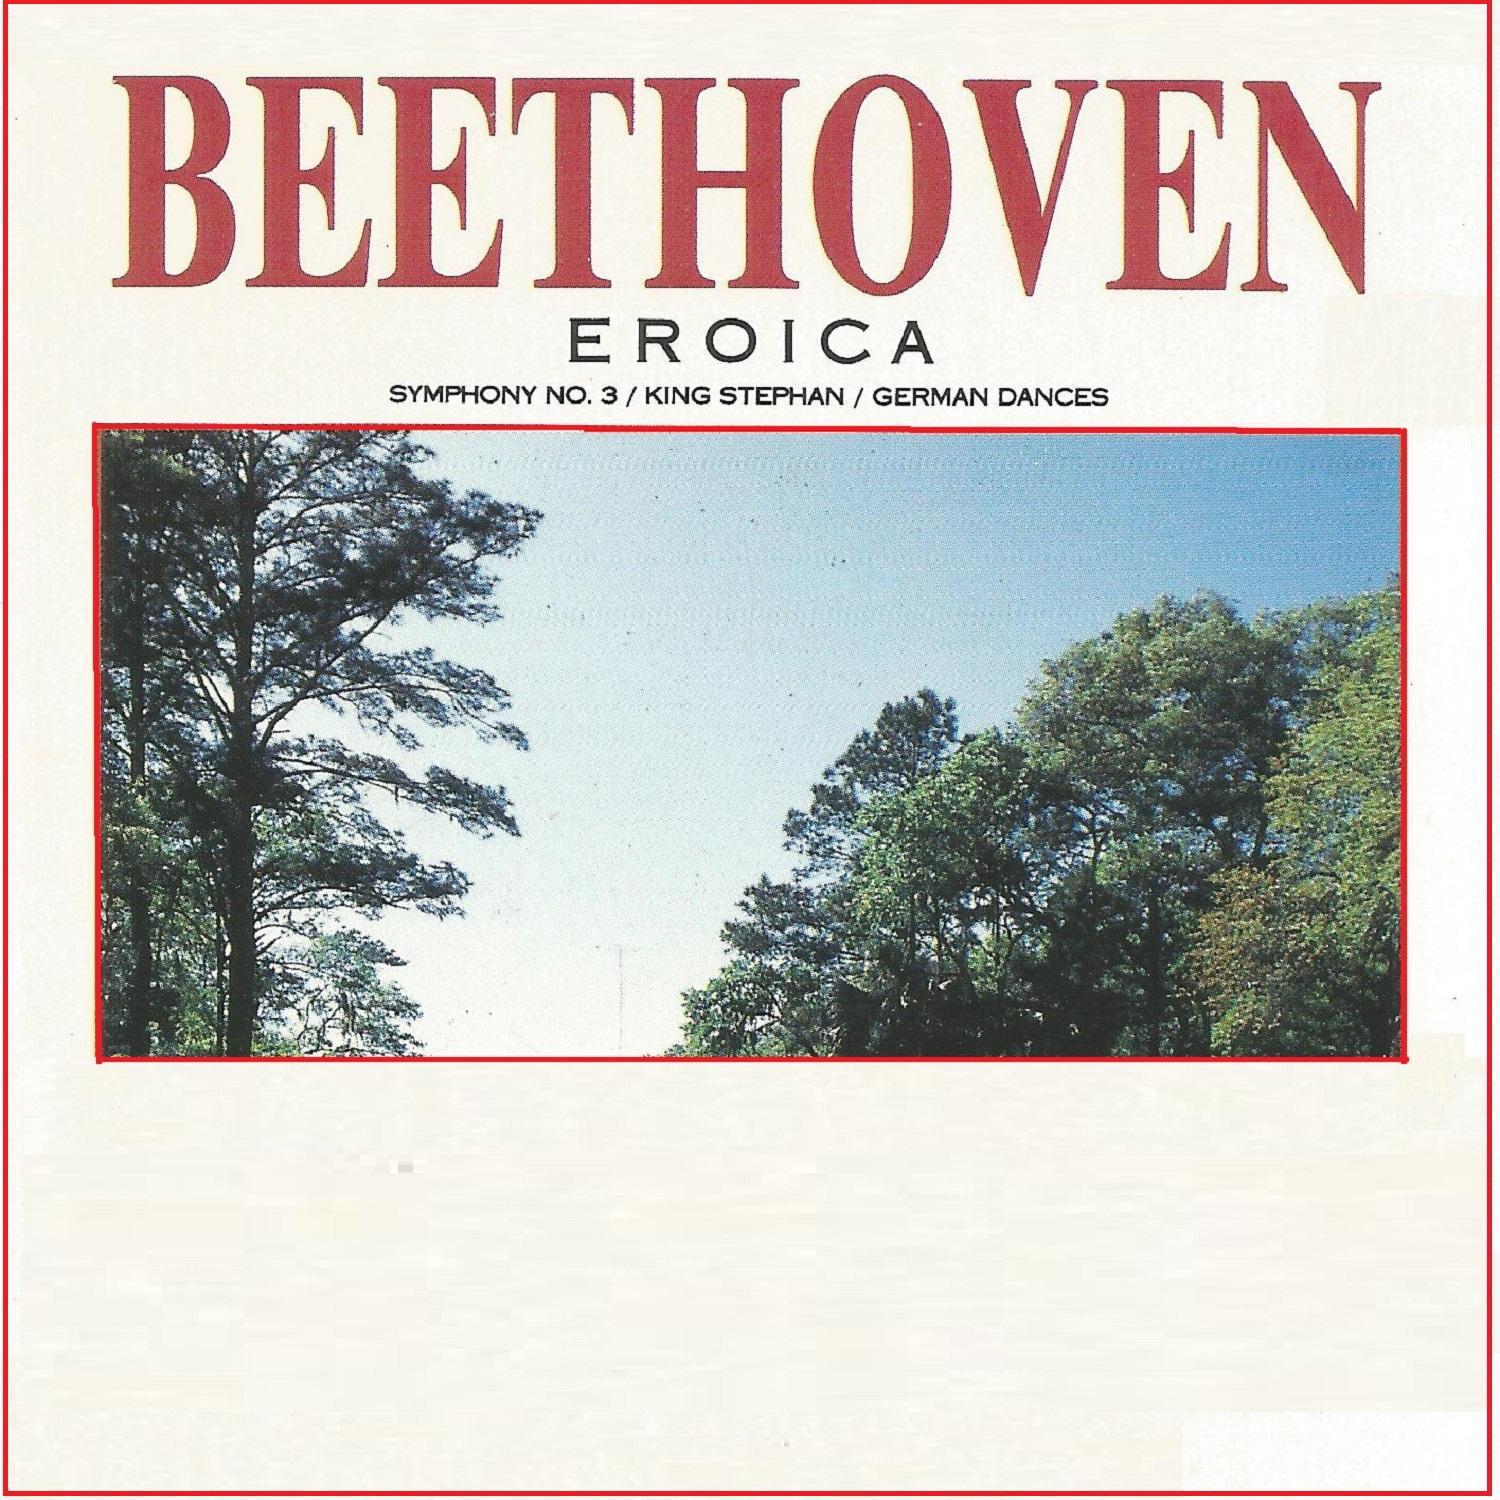 Beethoven - Eroica专辑